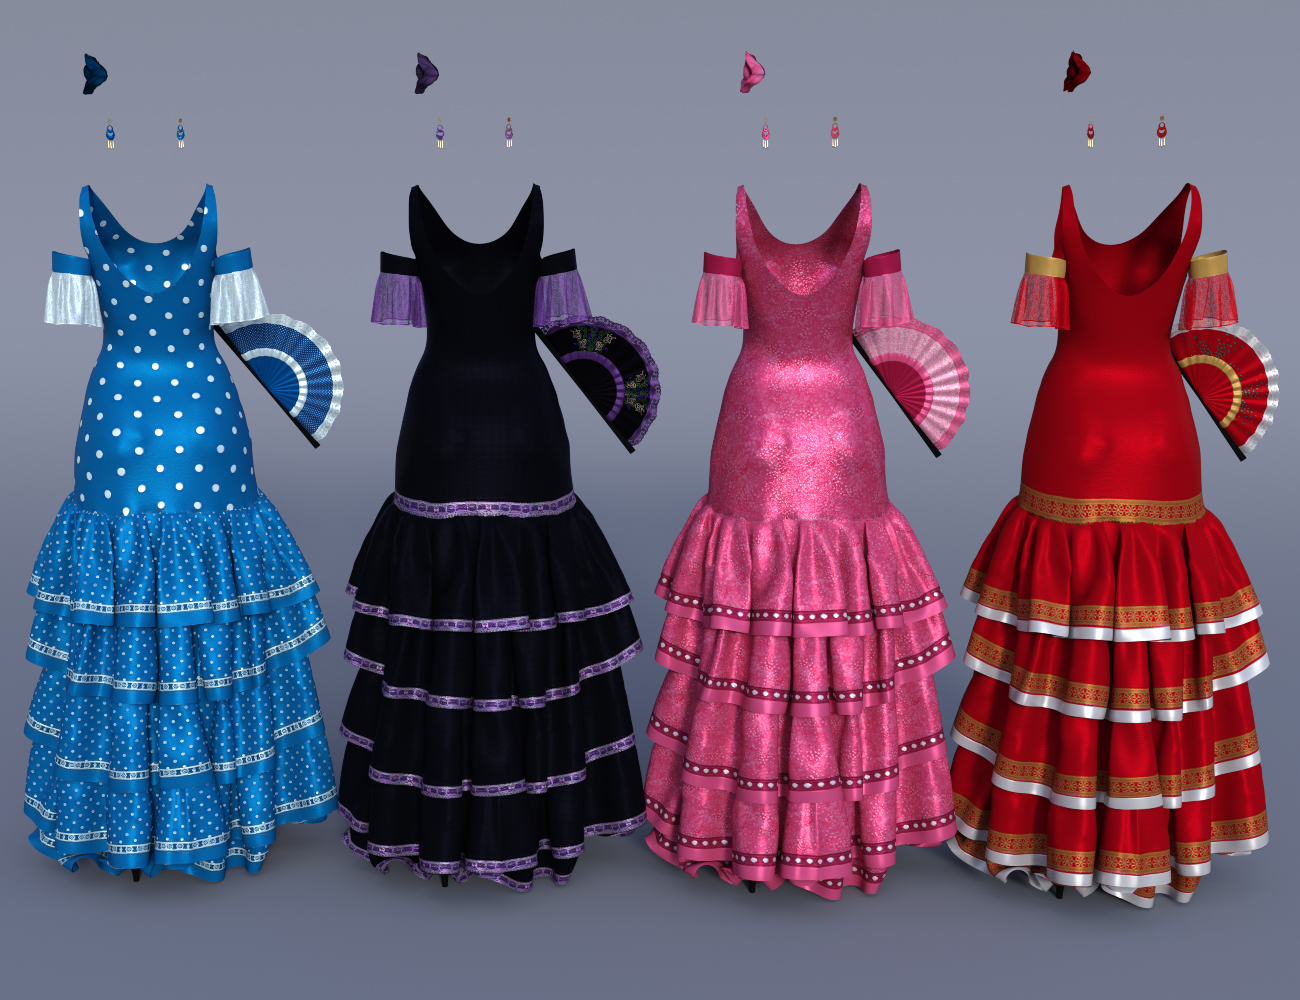 dForce Flamenco Dancer Outfit Textures by: OziChick, 3D Models by Daz 3D